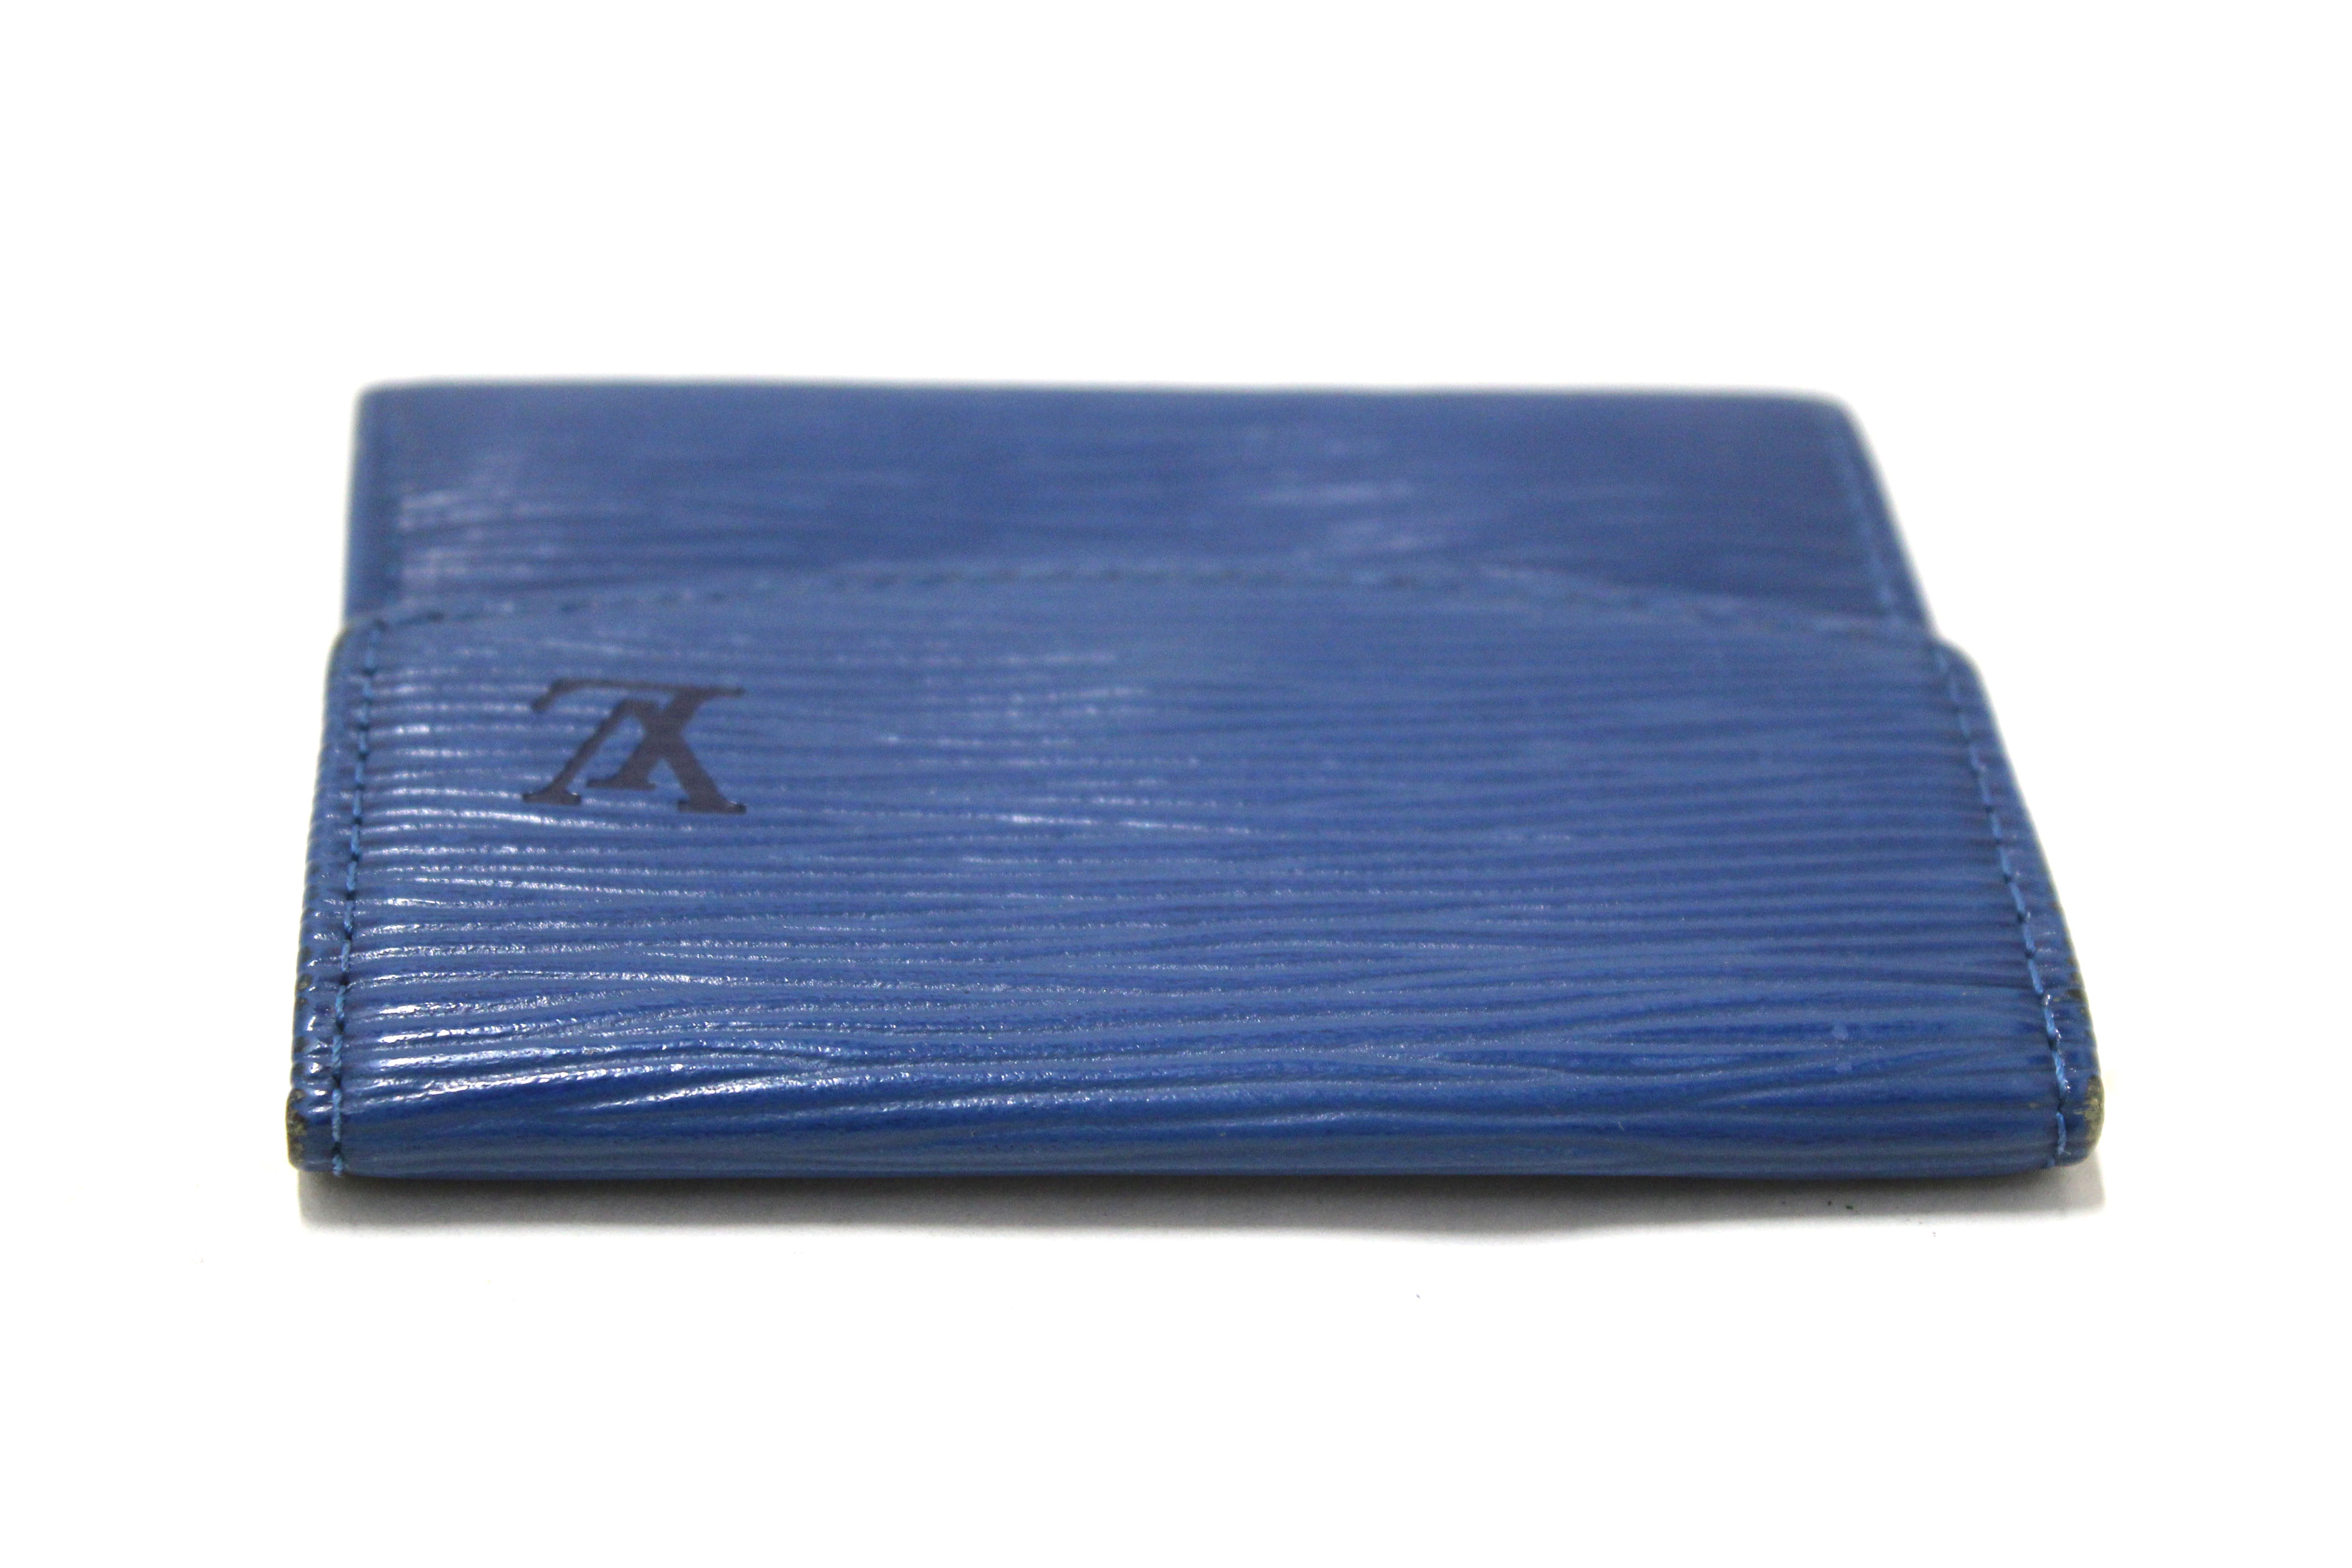 Louis Vuitton Navy Blue Epi Leather Card Holder